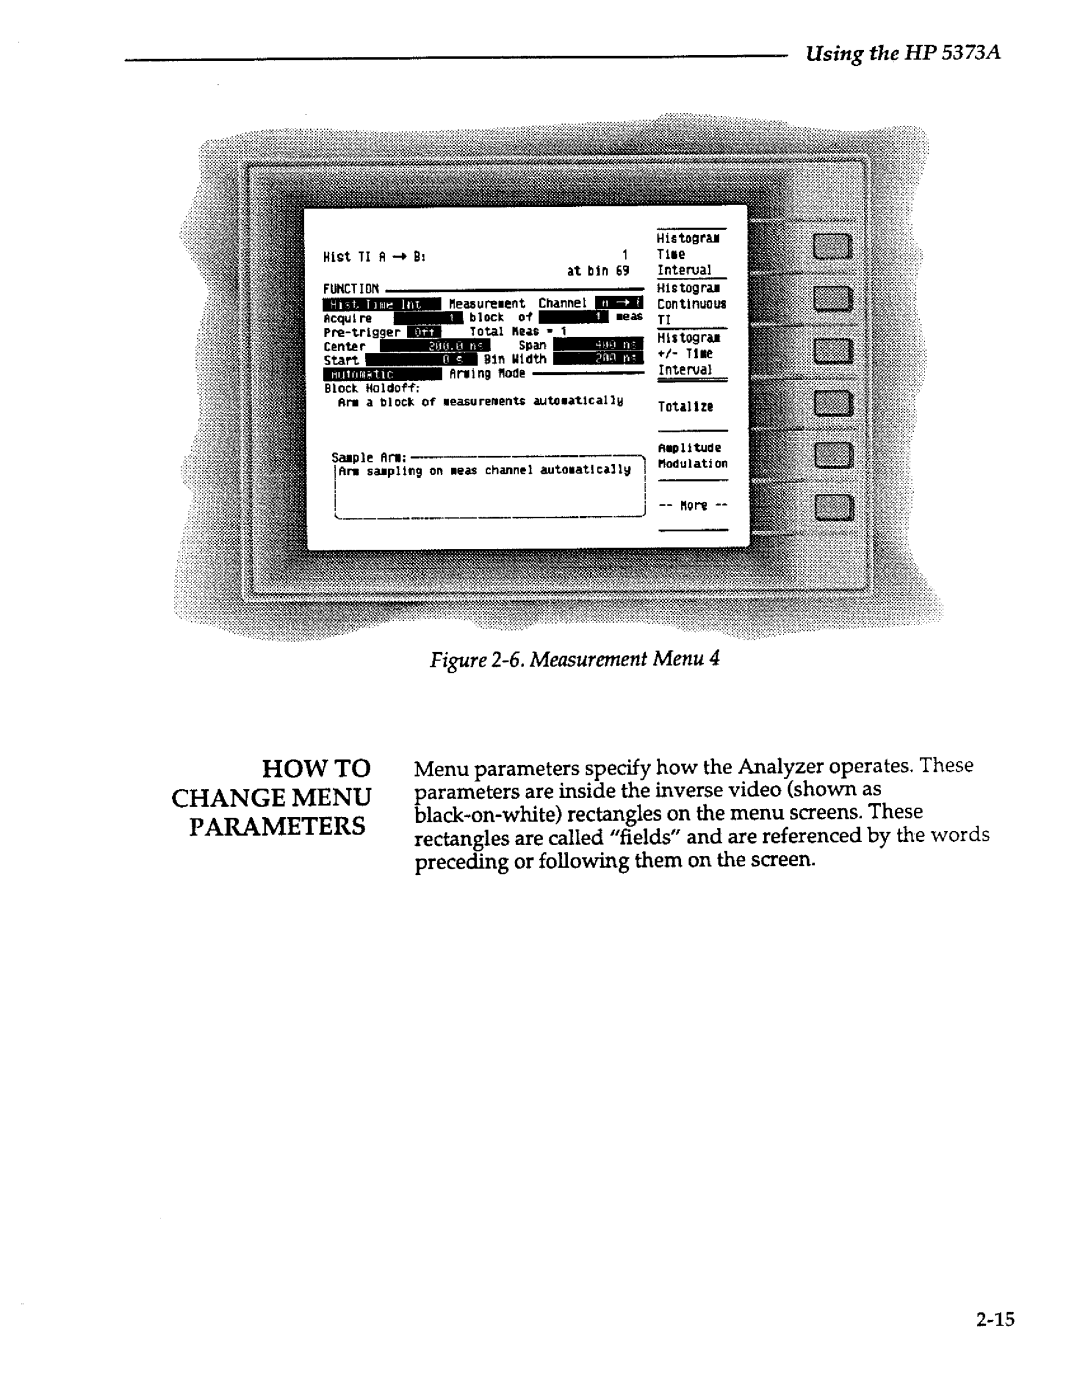 Agilent Technologies 5373A manual 